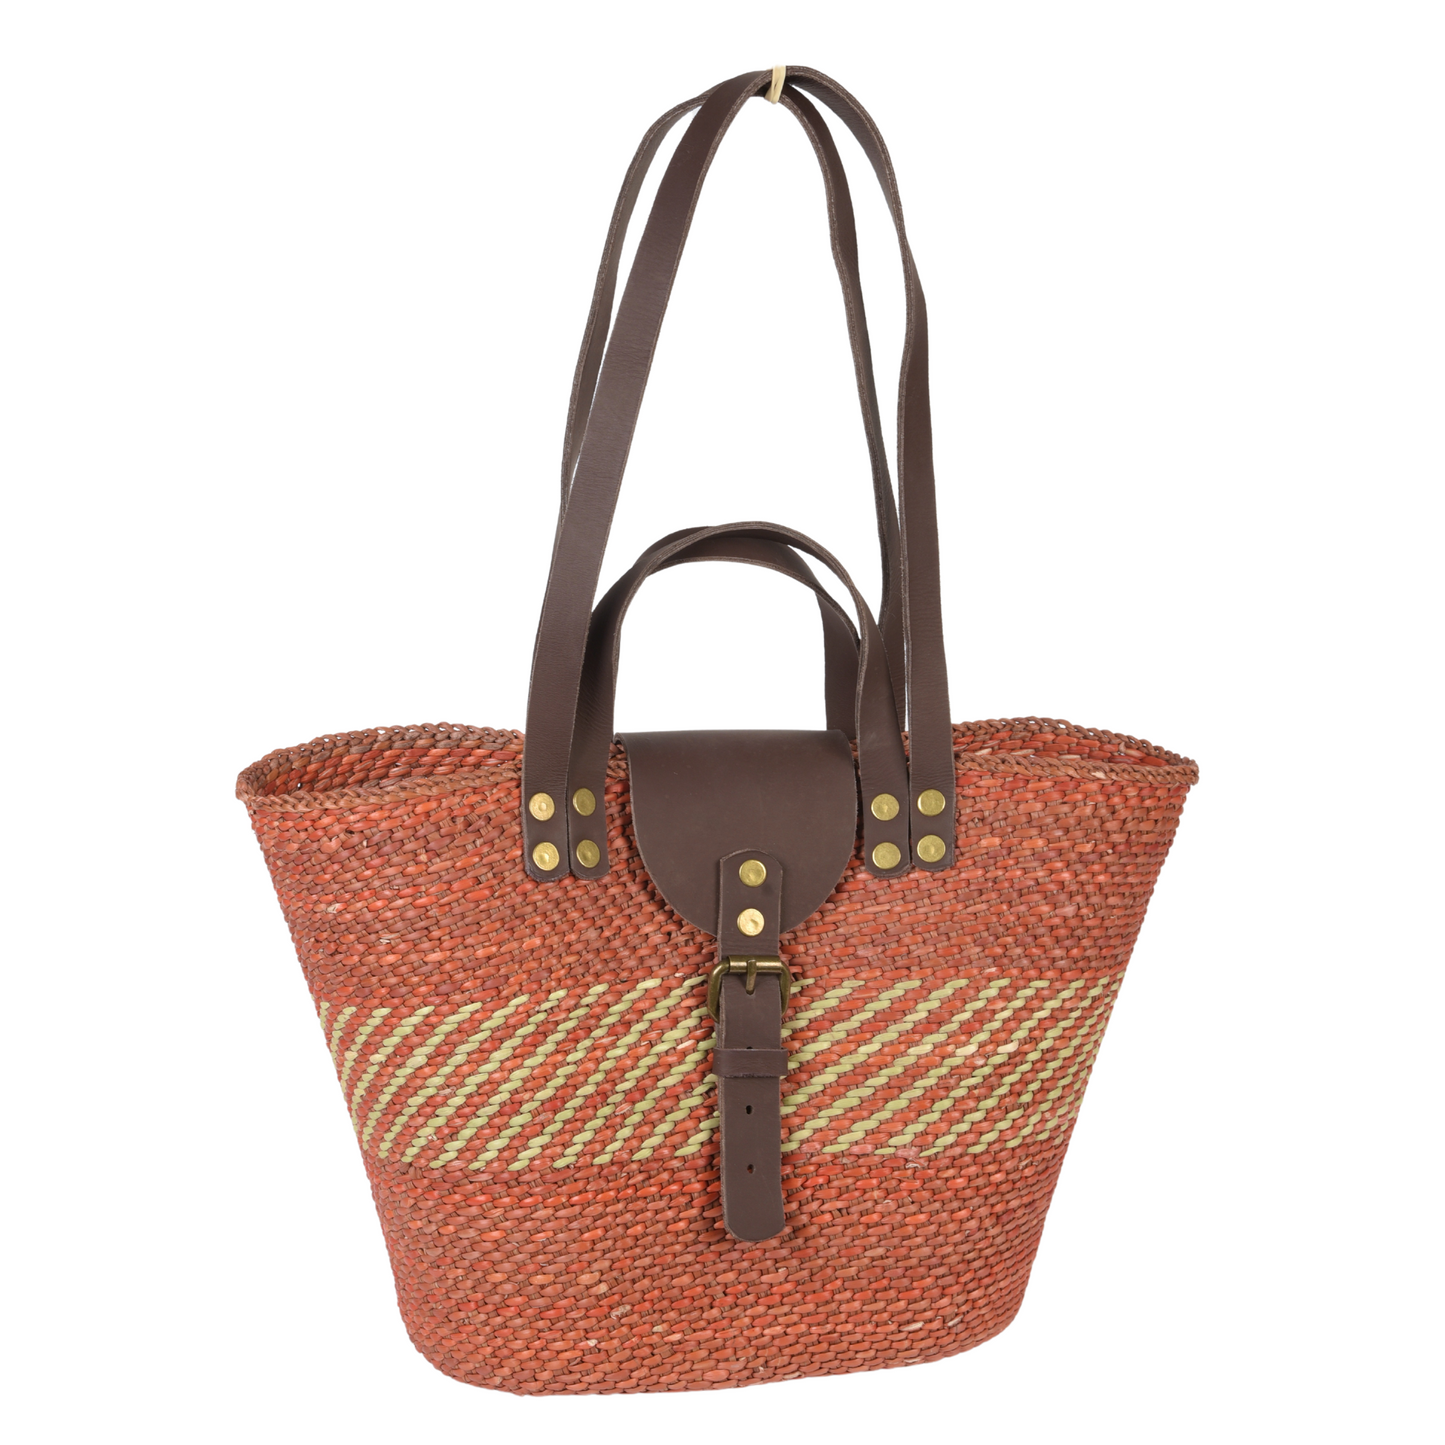 Iringa Handwoven Handbag Basket with leather flap (Double Straps)